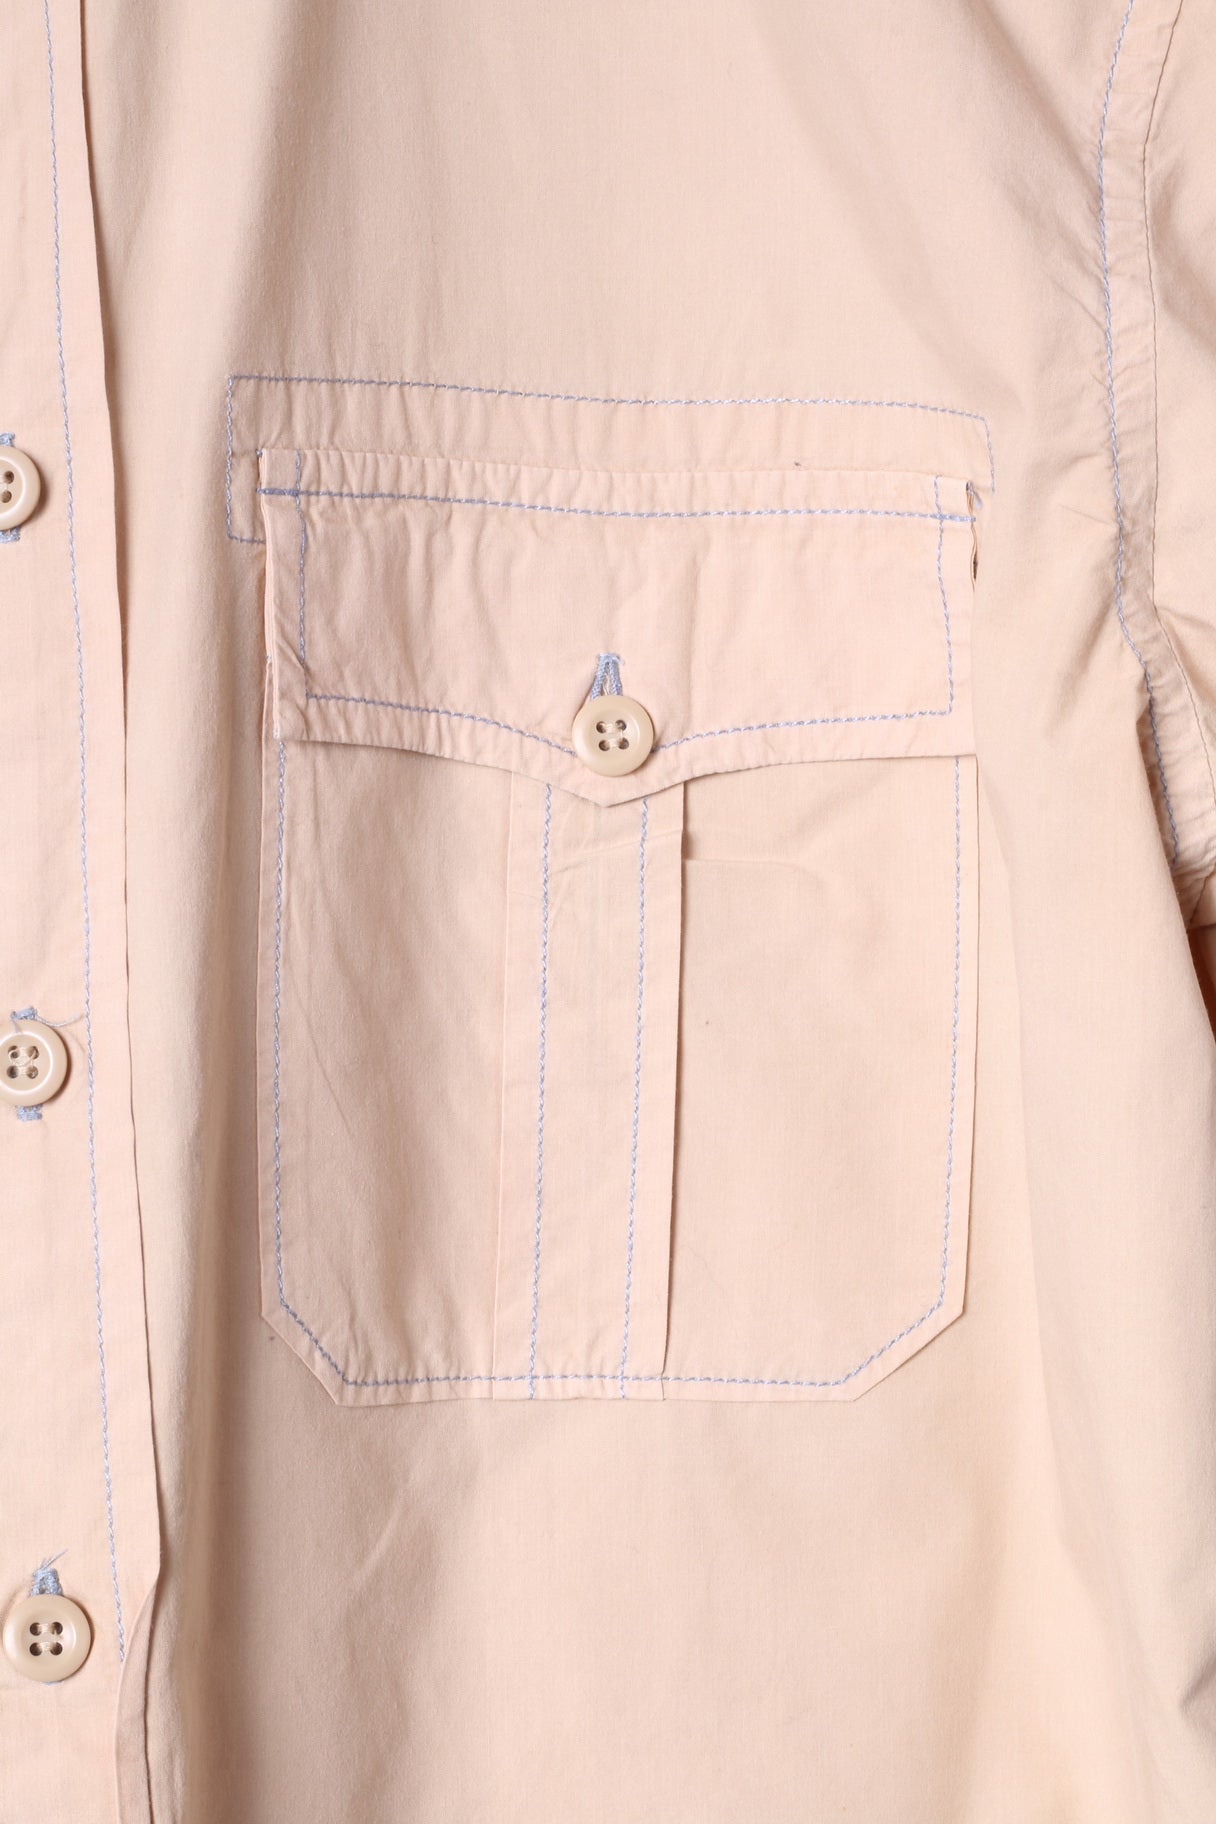 Camicia casual XL da uomo Blue Jeans di marca Replay Top a maniche corte ricamato in cotone beige